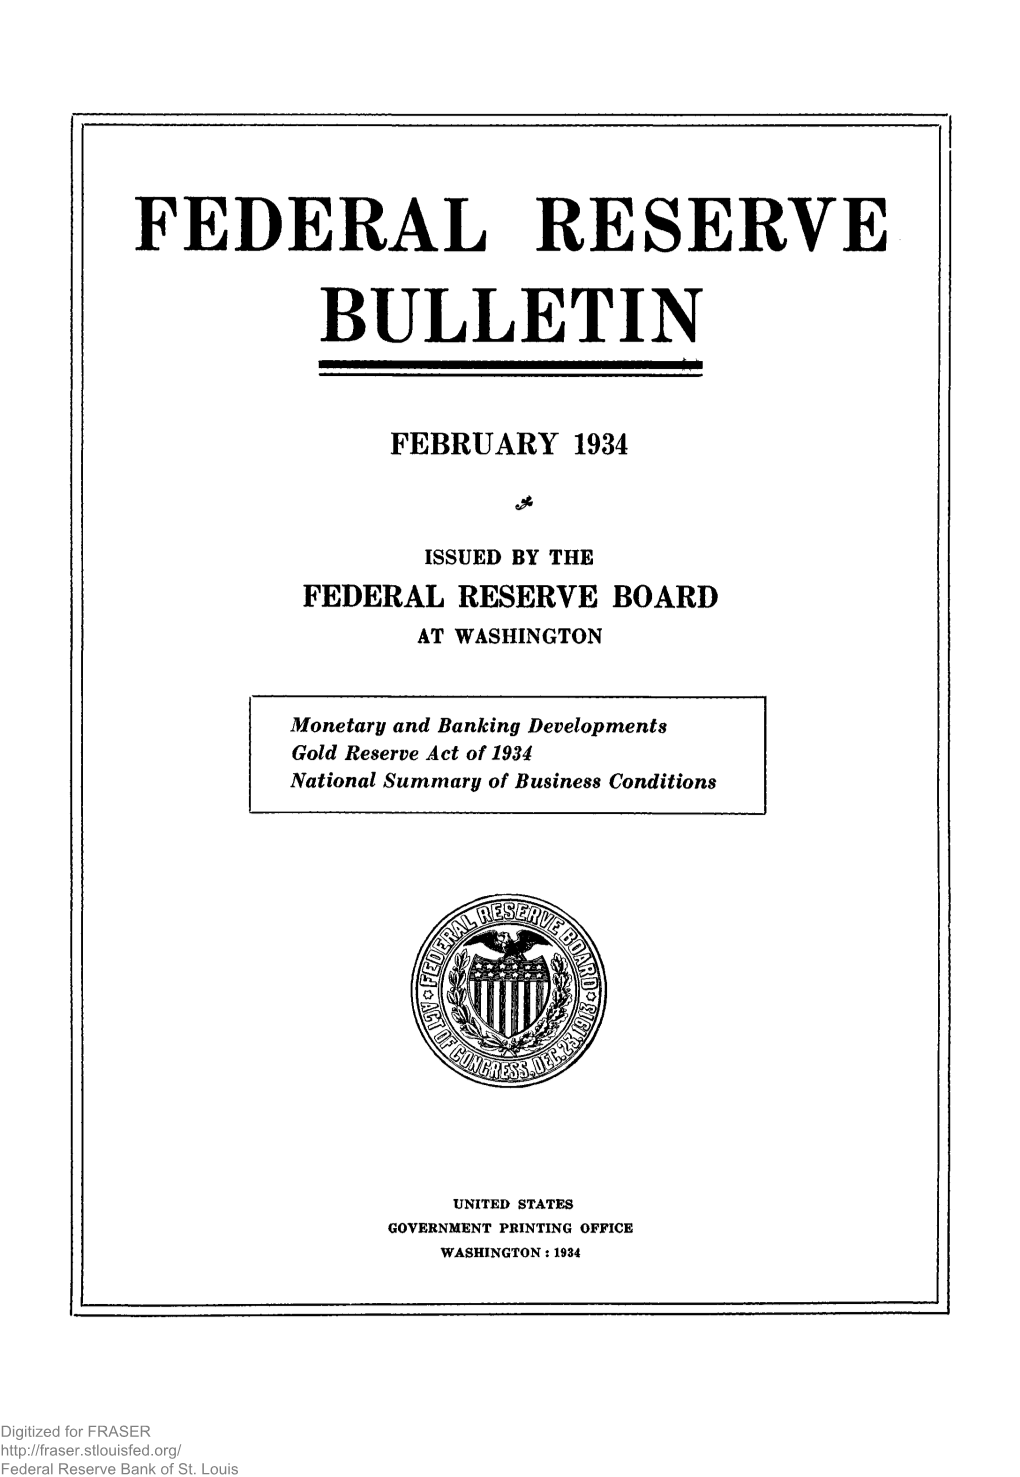 Federal Reserve Bulletin February 1934